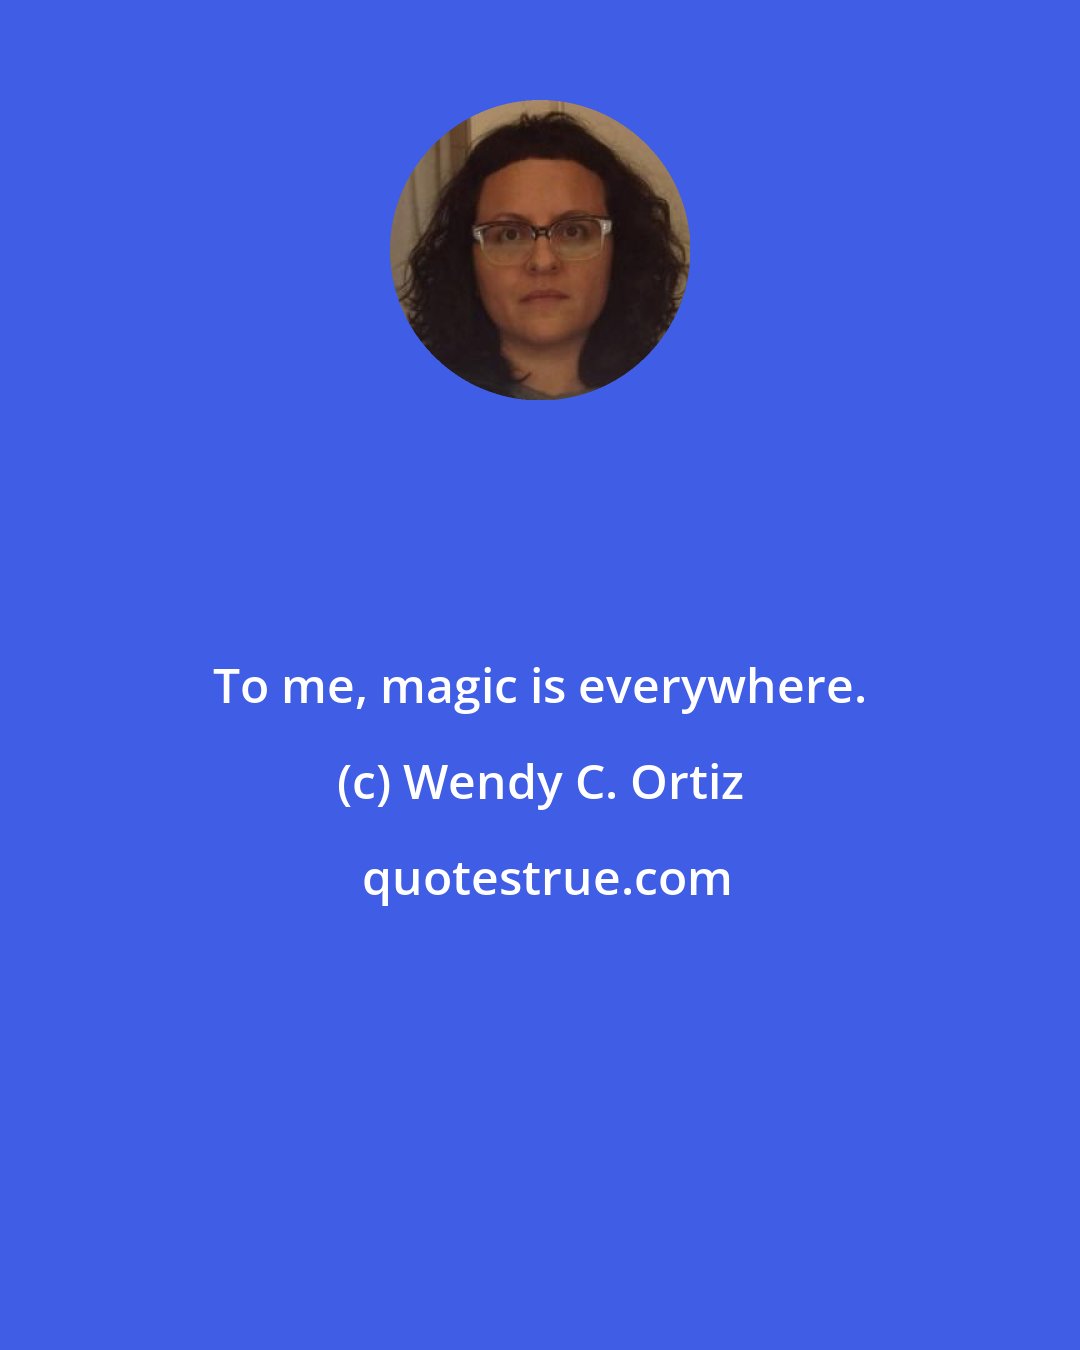 Wendy C. Ortiz: To me, magic is everywhere.